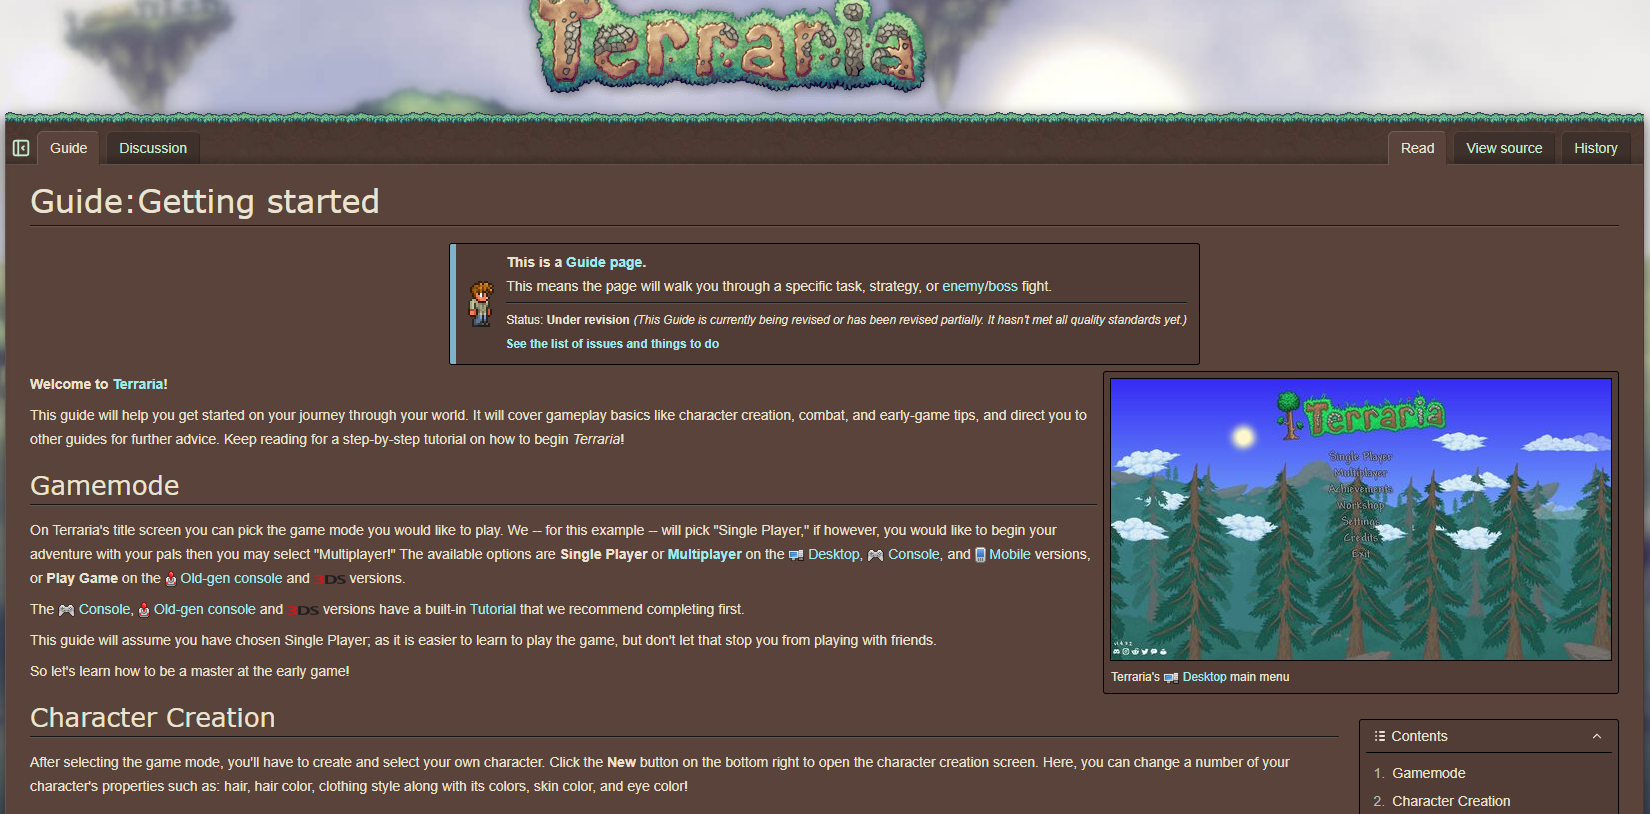 Steam Community :: Guide :: Secret Seeds Terraria (Guide)